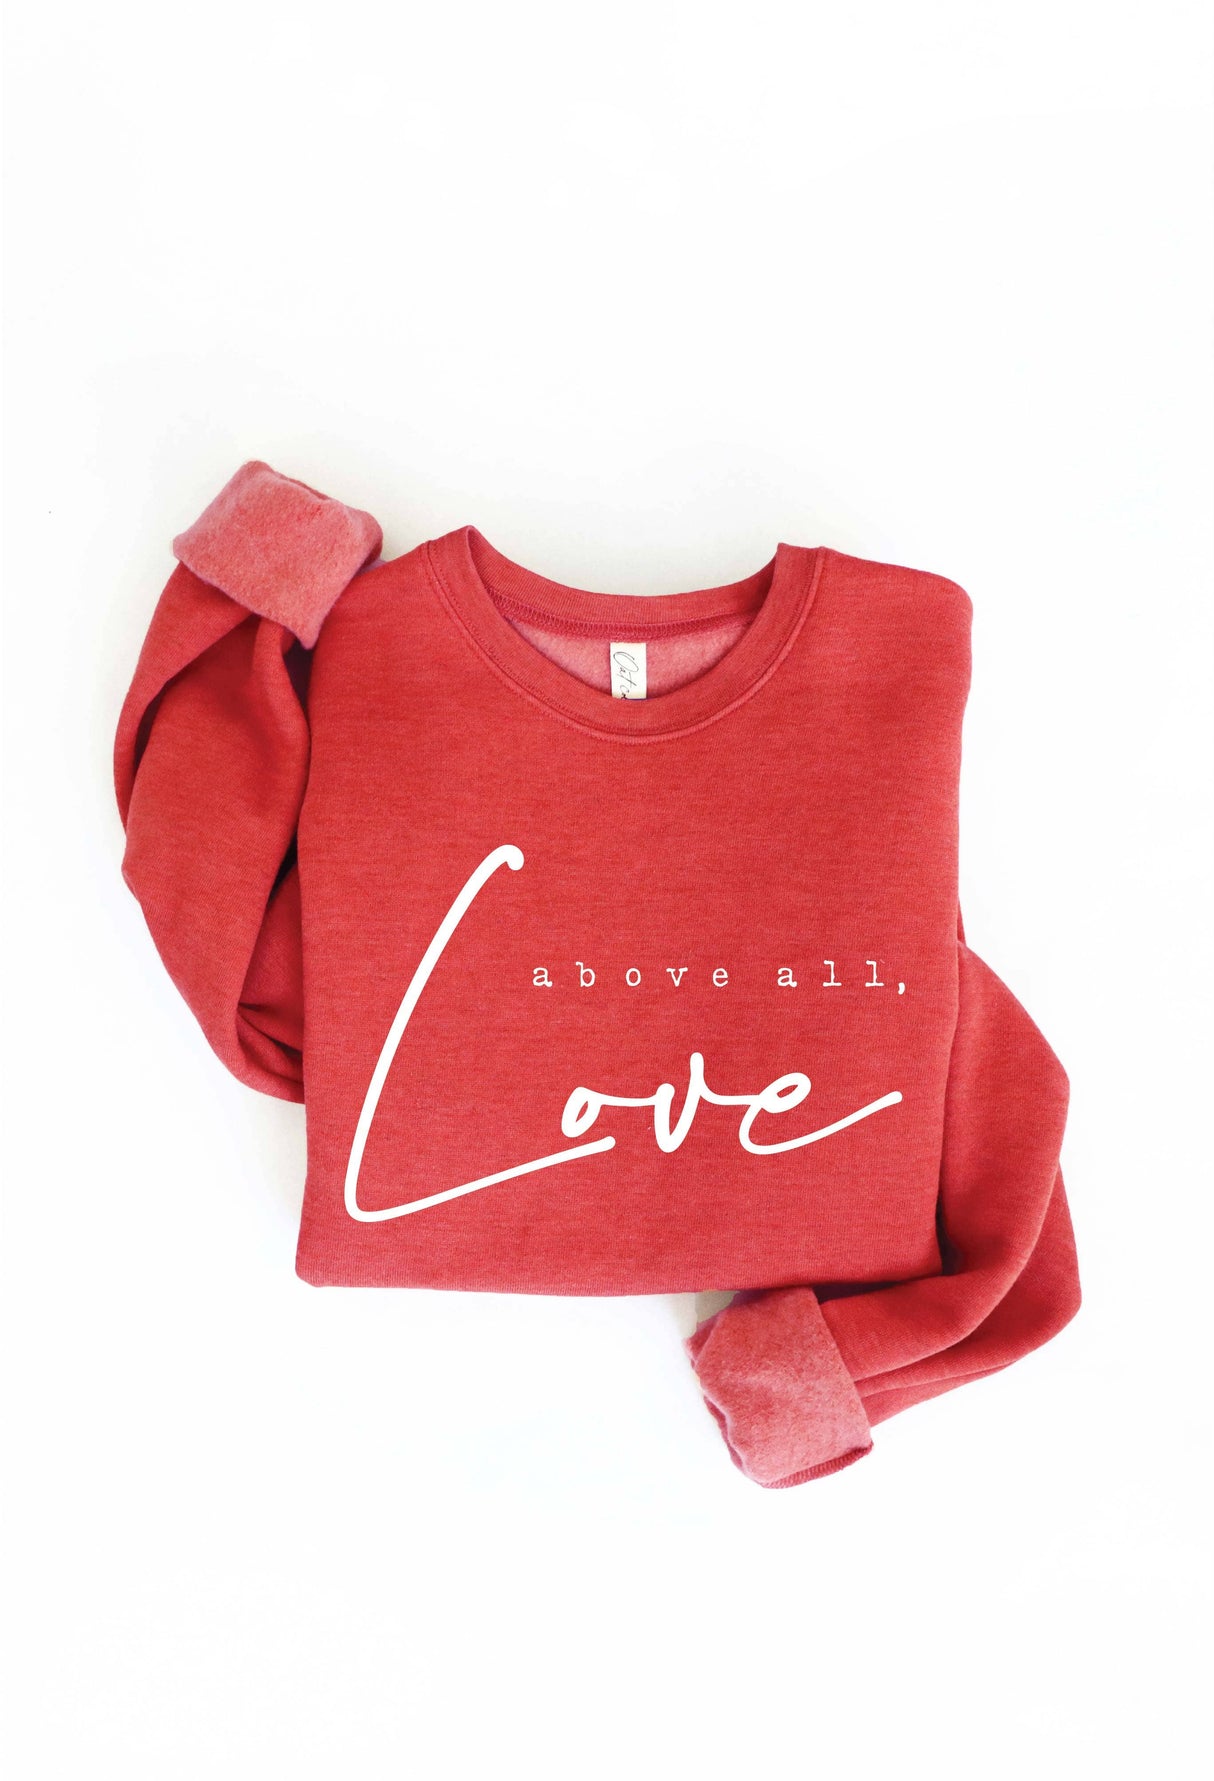 ABOVE ALL, LOVE Graphic Sweatshirt: XL / CRANBERRY HEATHER